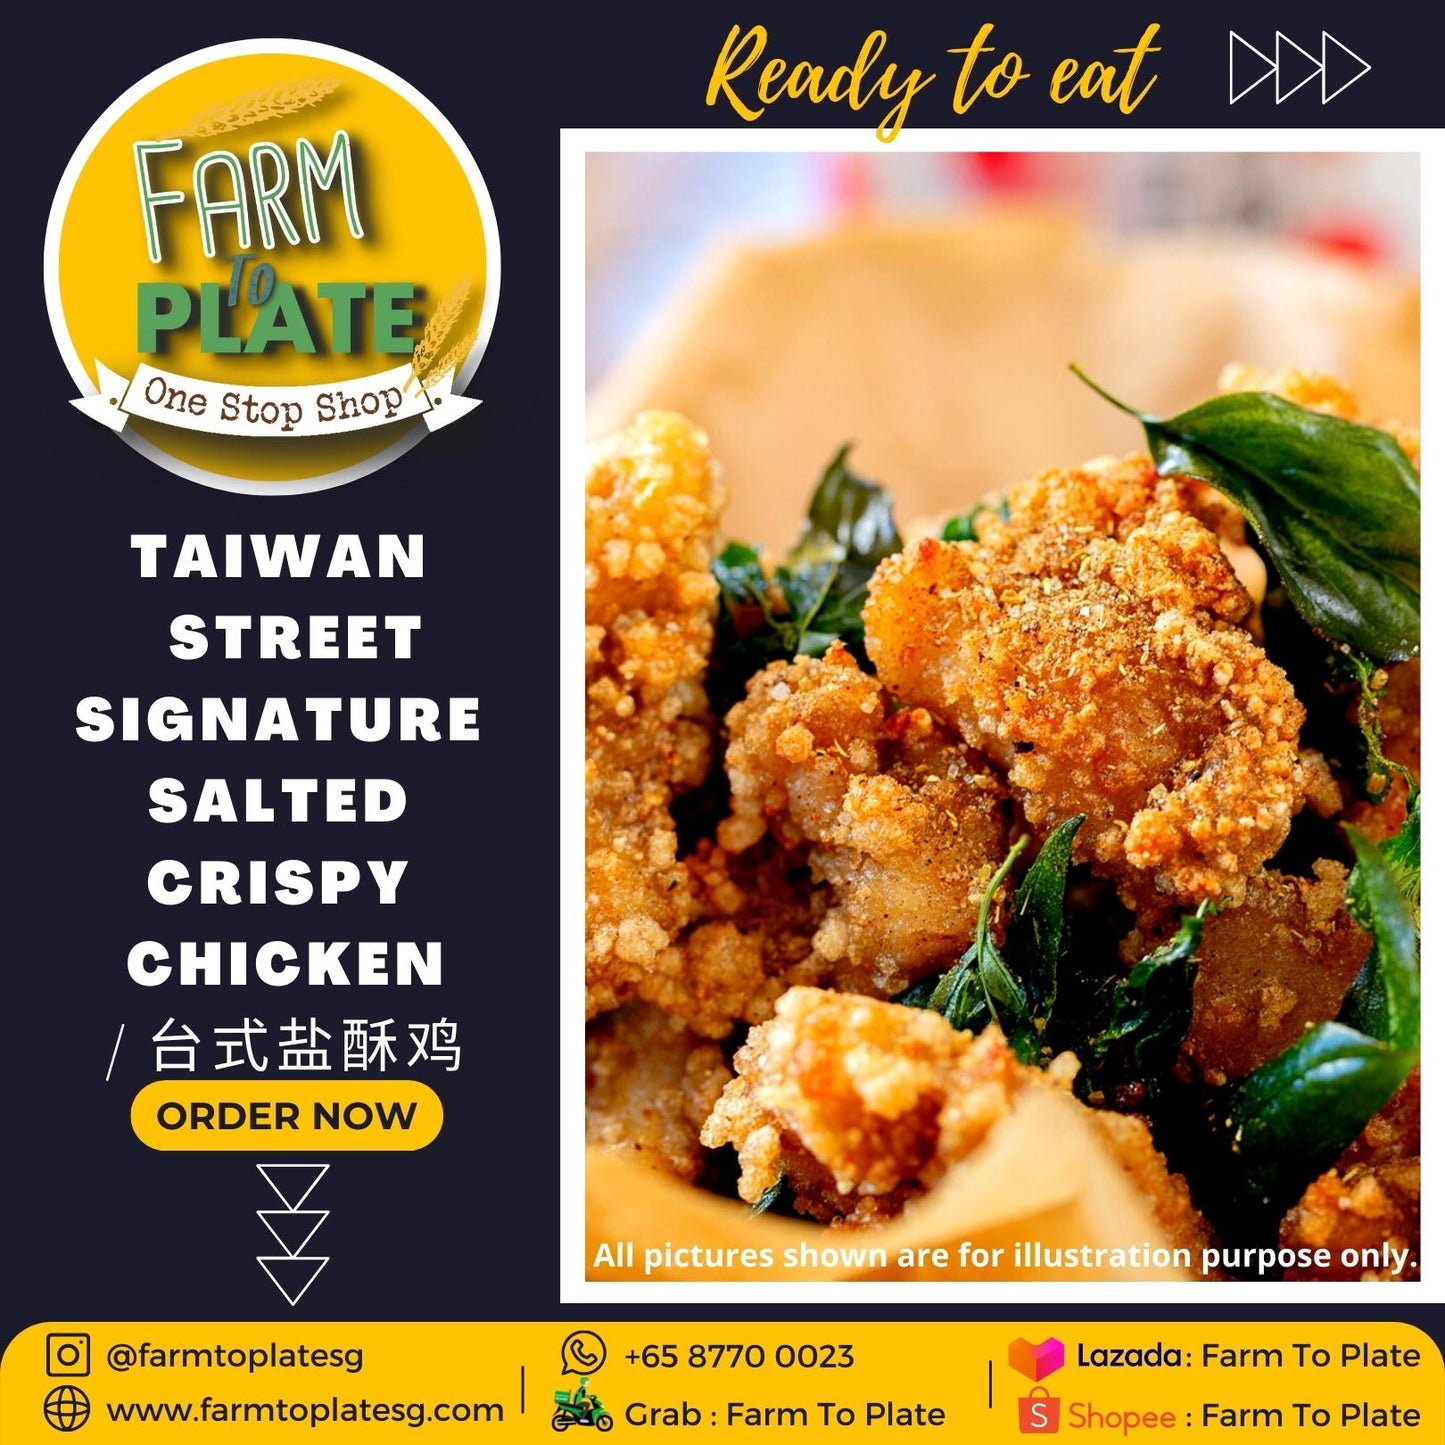 【FARM TO PLATE】Taiwan Style Salted Crispy Chicken / 台湾盐酥鸡 / Taiwan Street Food